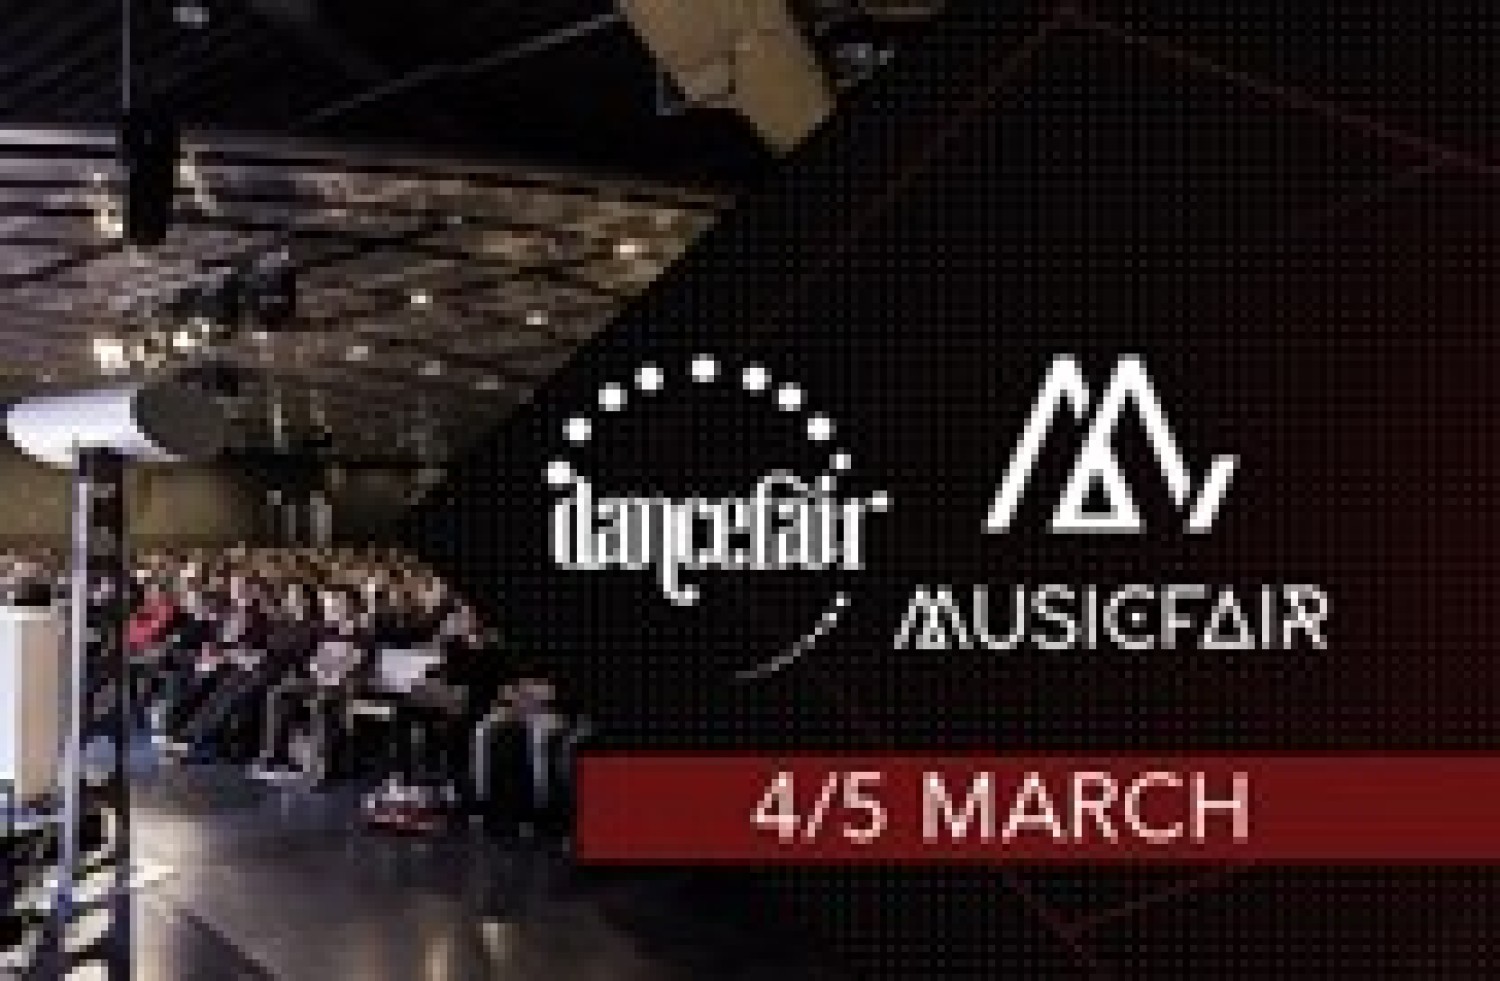 Party report: Dancefair/Musicfair, Utrecht (04-03-2017)